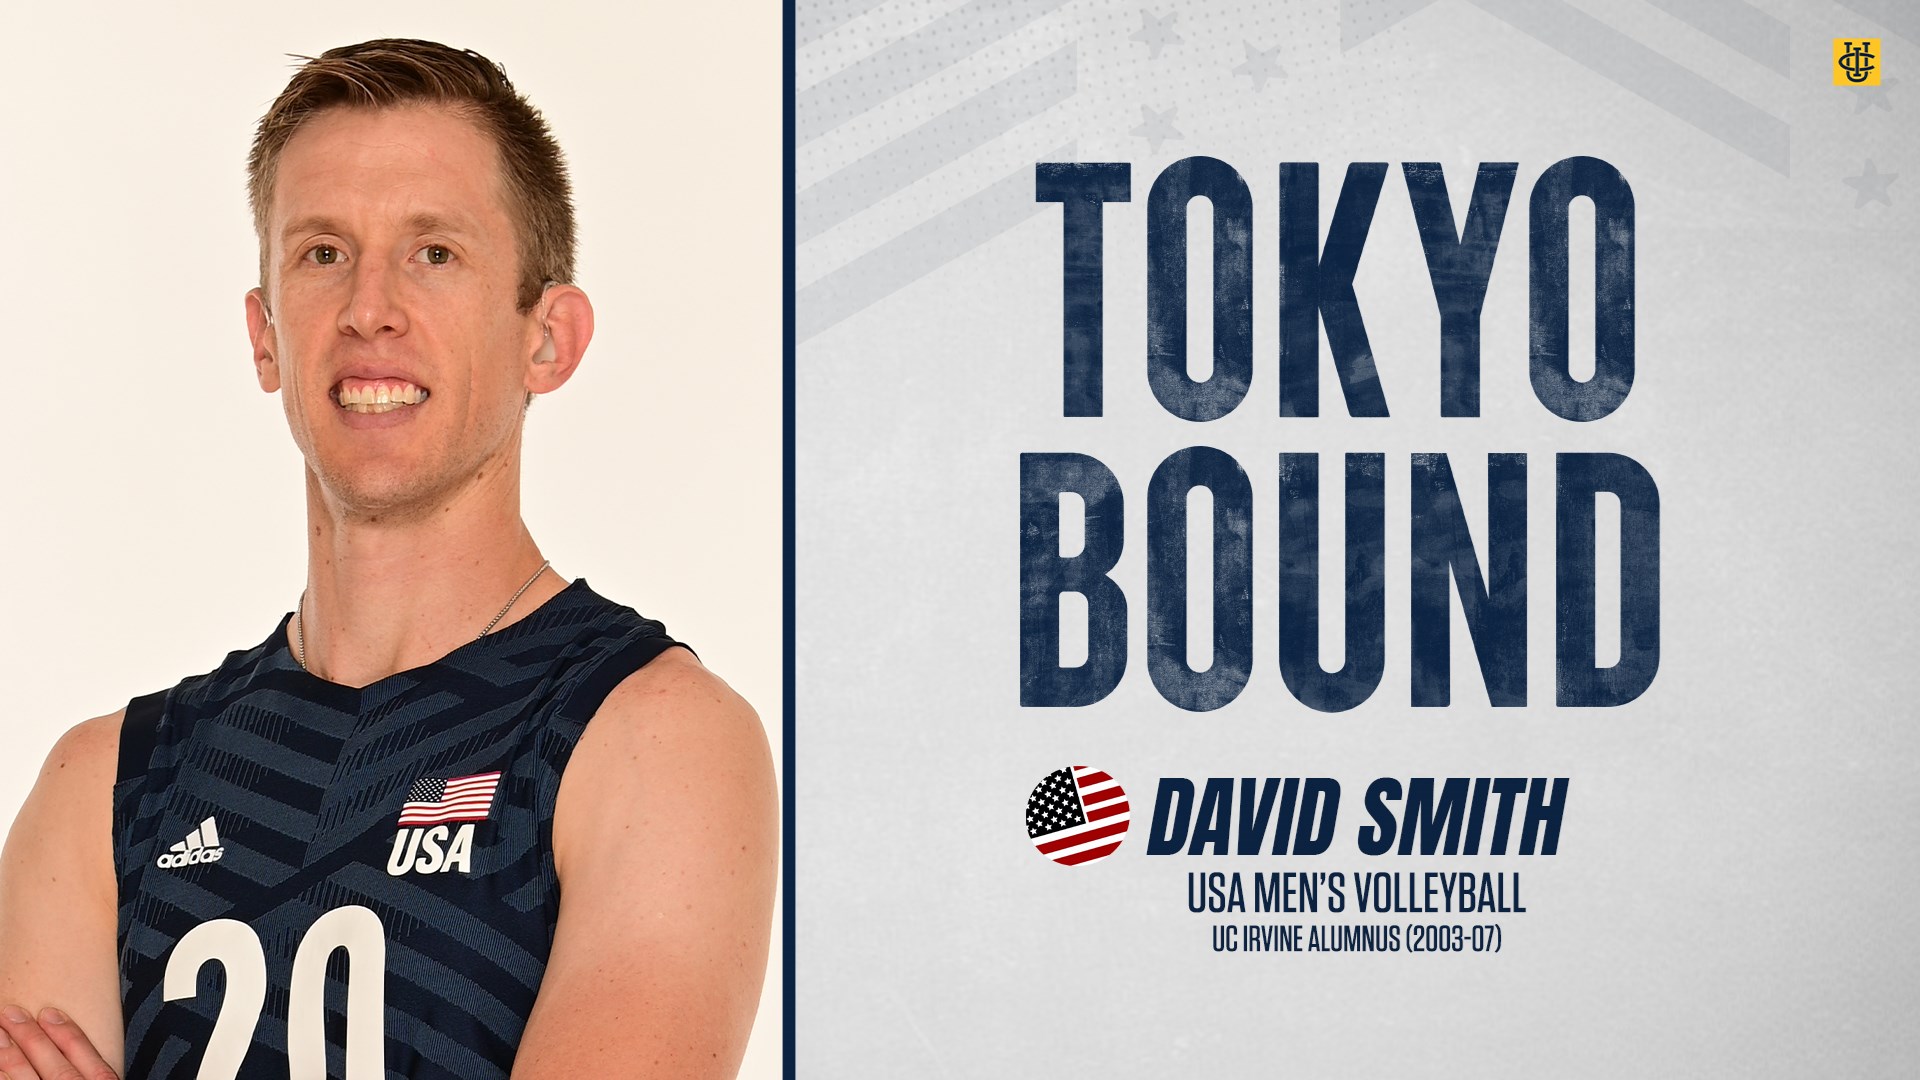 Tokyo Bound, David Smith USA Men's Volleyball UCI Alumnus (2003-07)